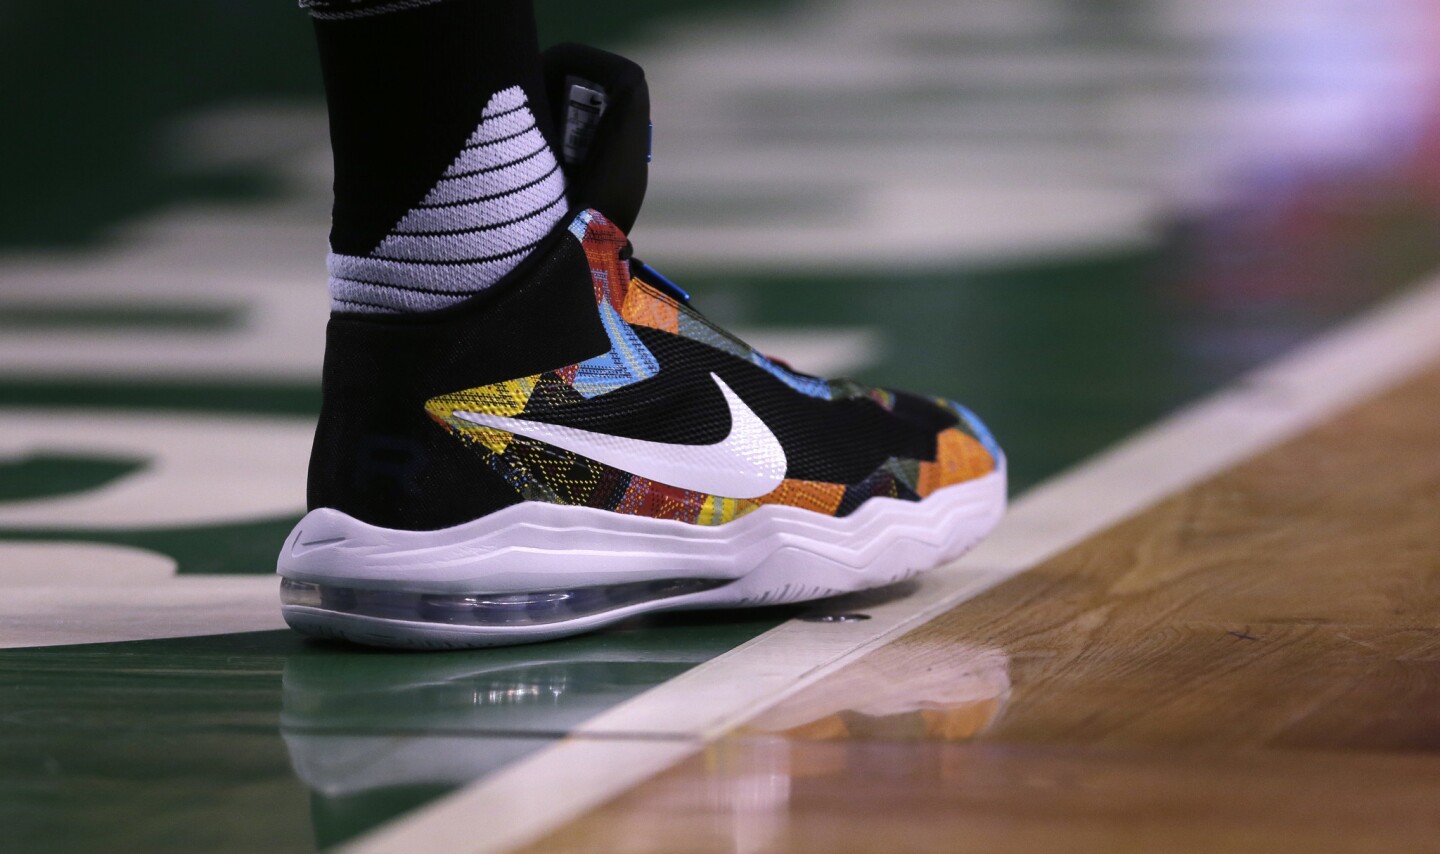 Boston Celtics forward Jonas Jerebko wears colorful Nike shoes during the first quarter of an NBA basketball game in Boston, Wednesday, Feb. 3, 2016. (AP Photo/Charles Krupa)